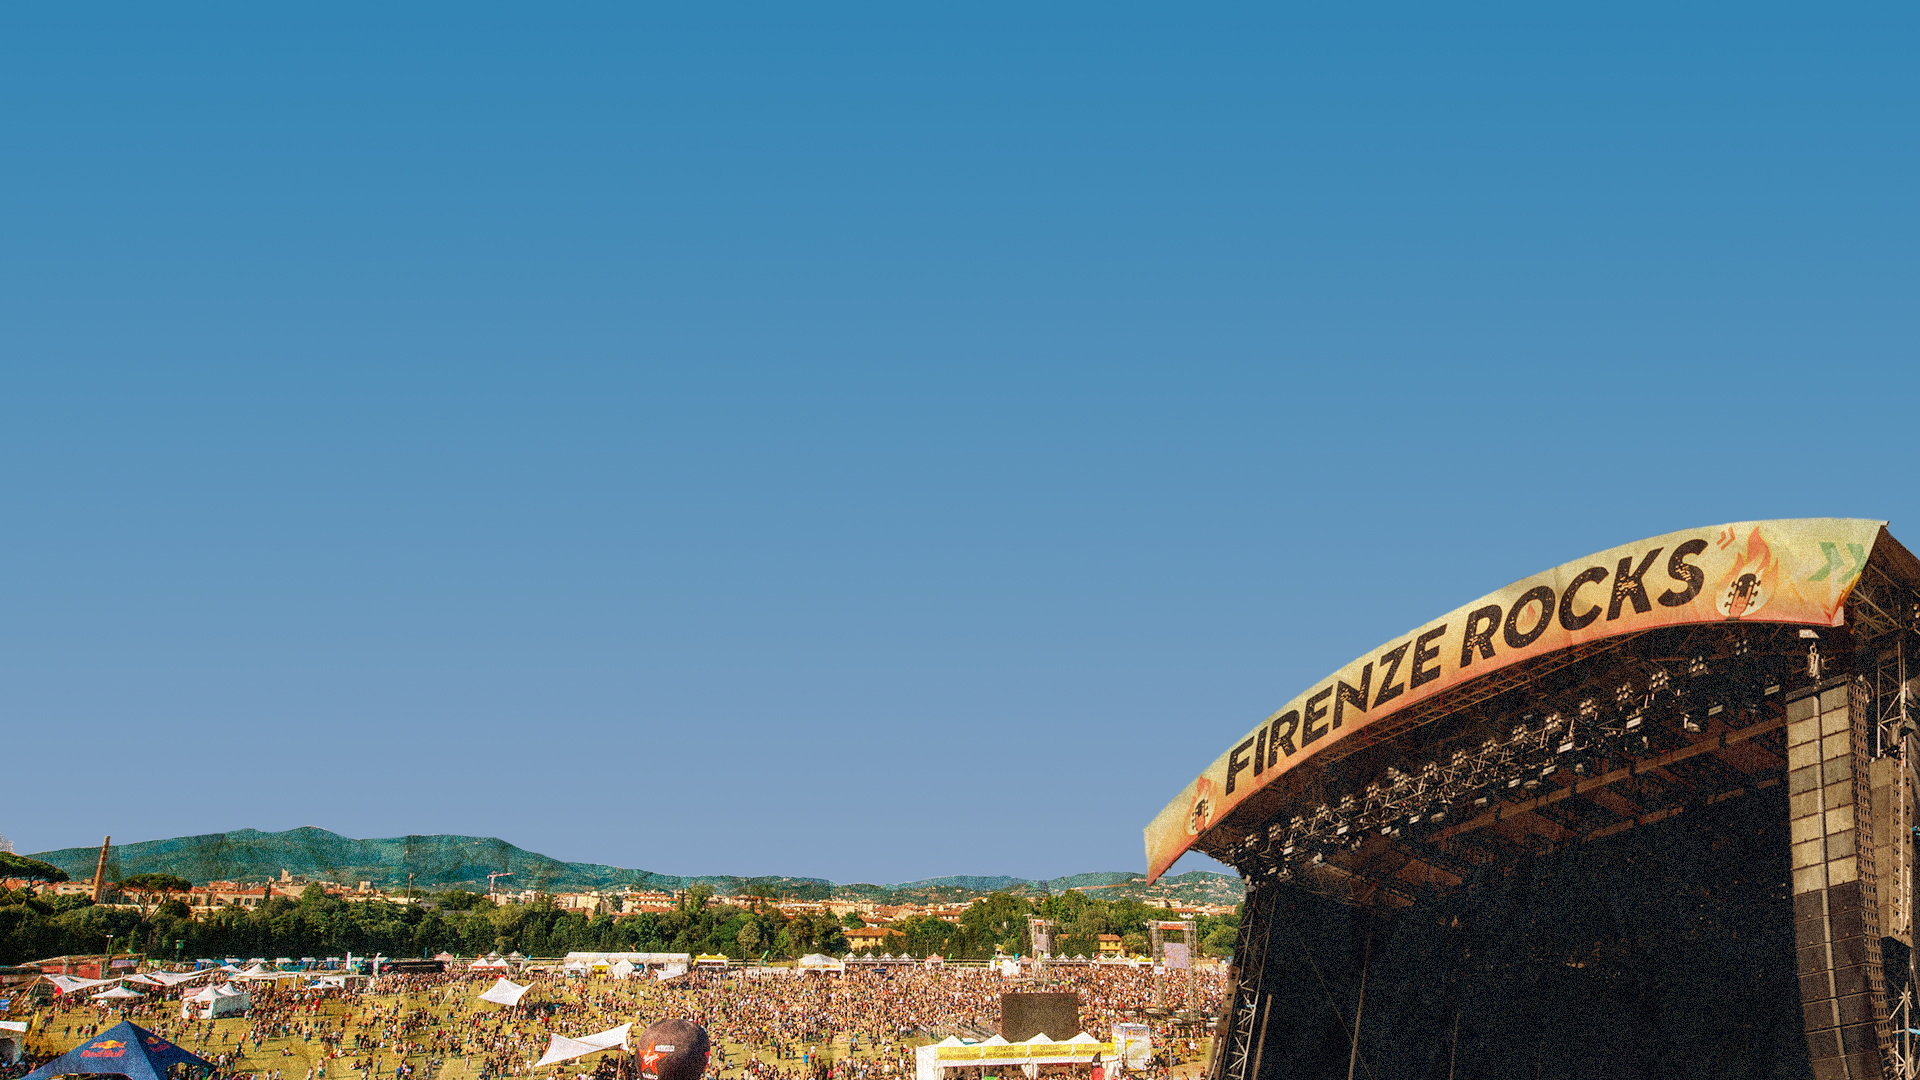 Firenze Rocks torna nel 2022 - Riconfermati i Green Day